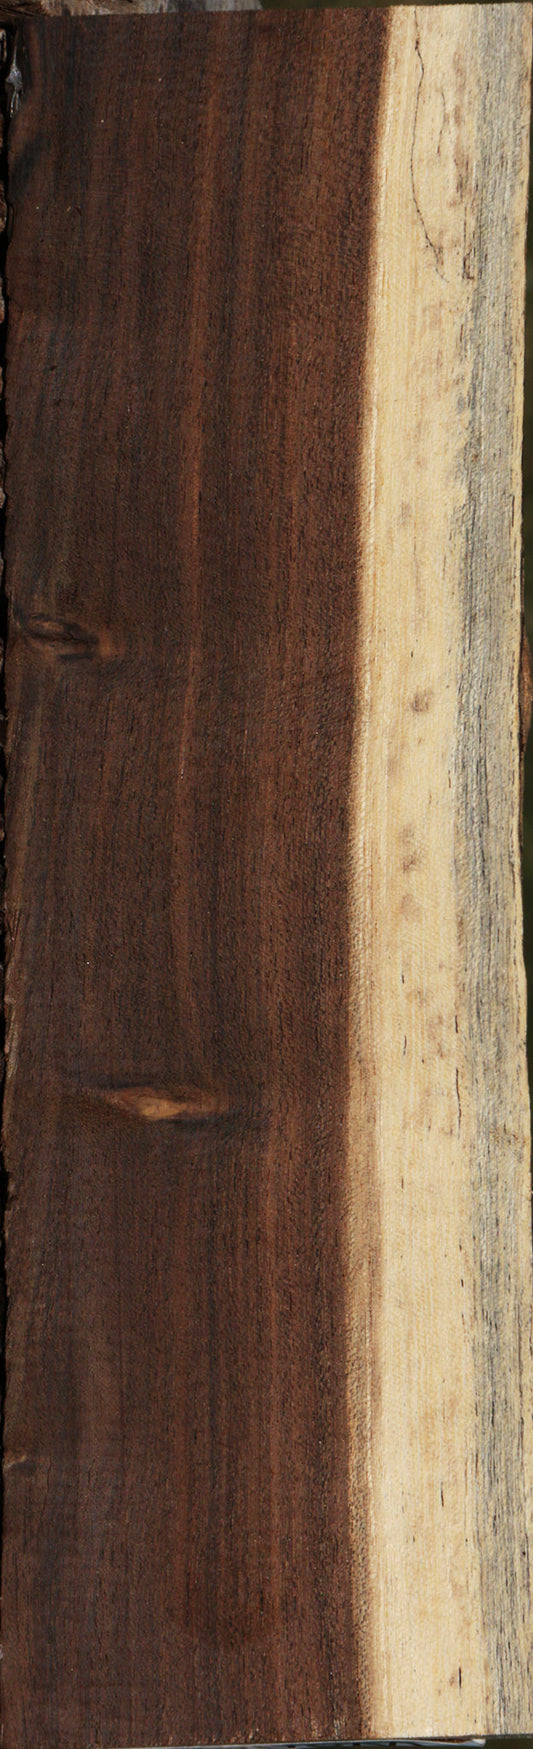 Leadwood Live Edge Lumber